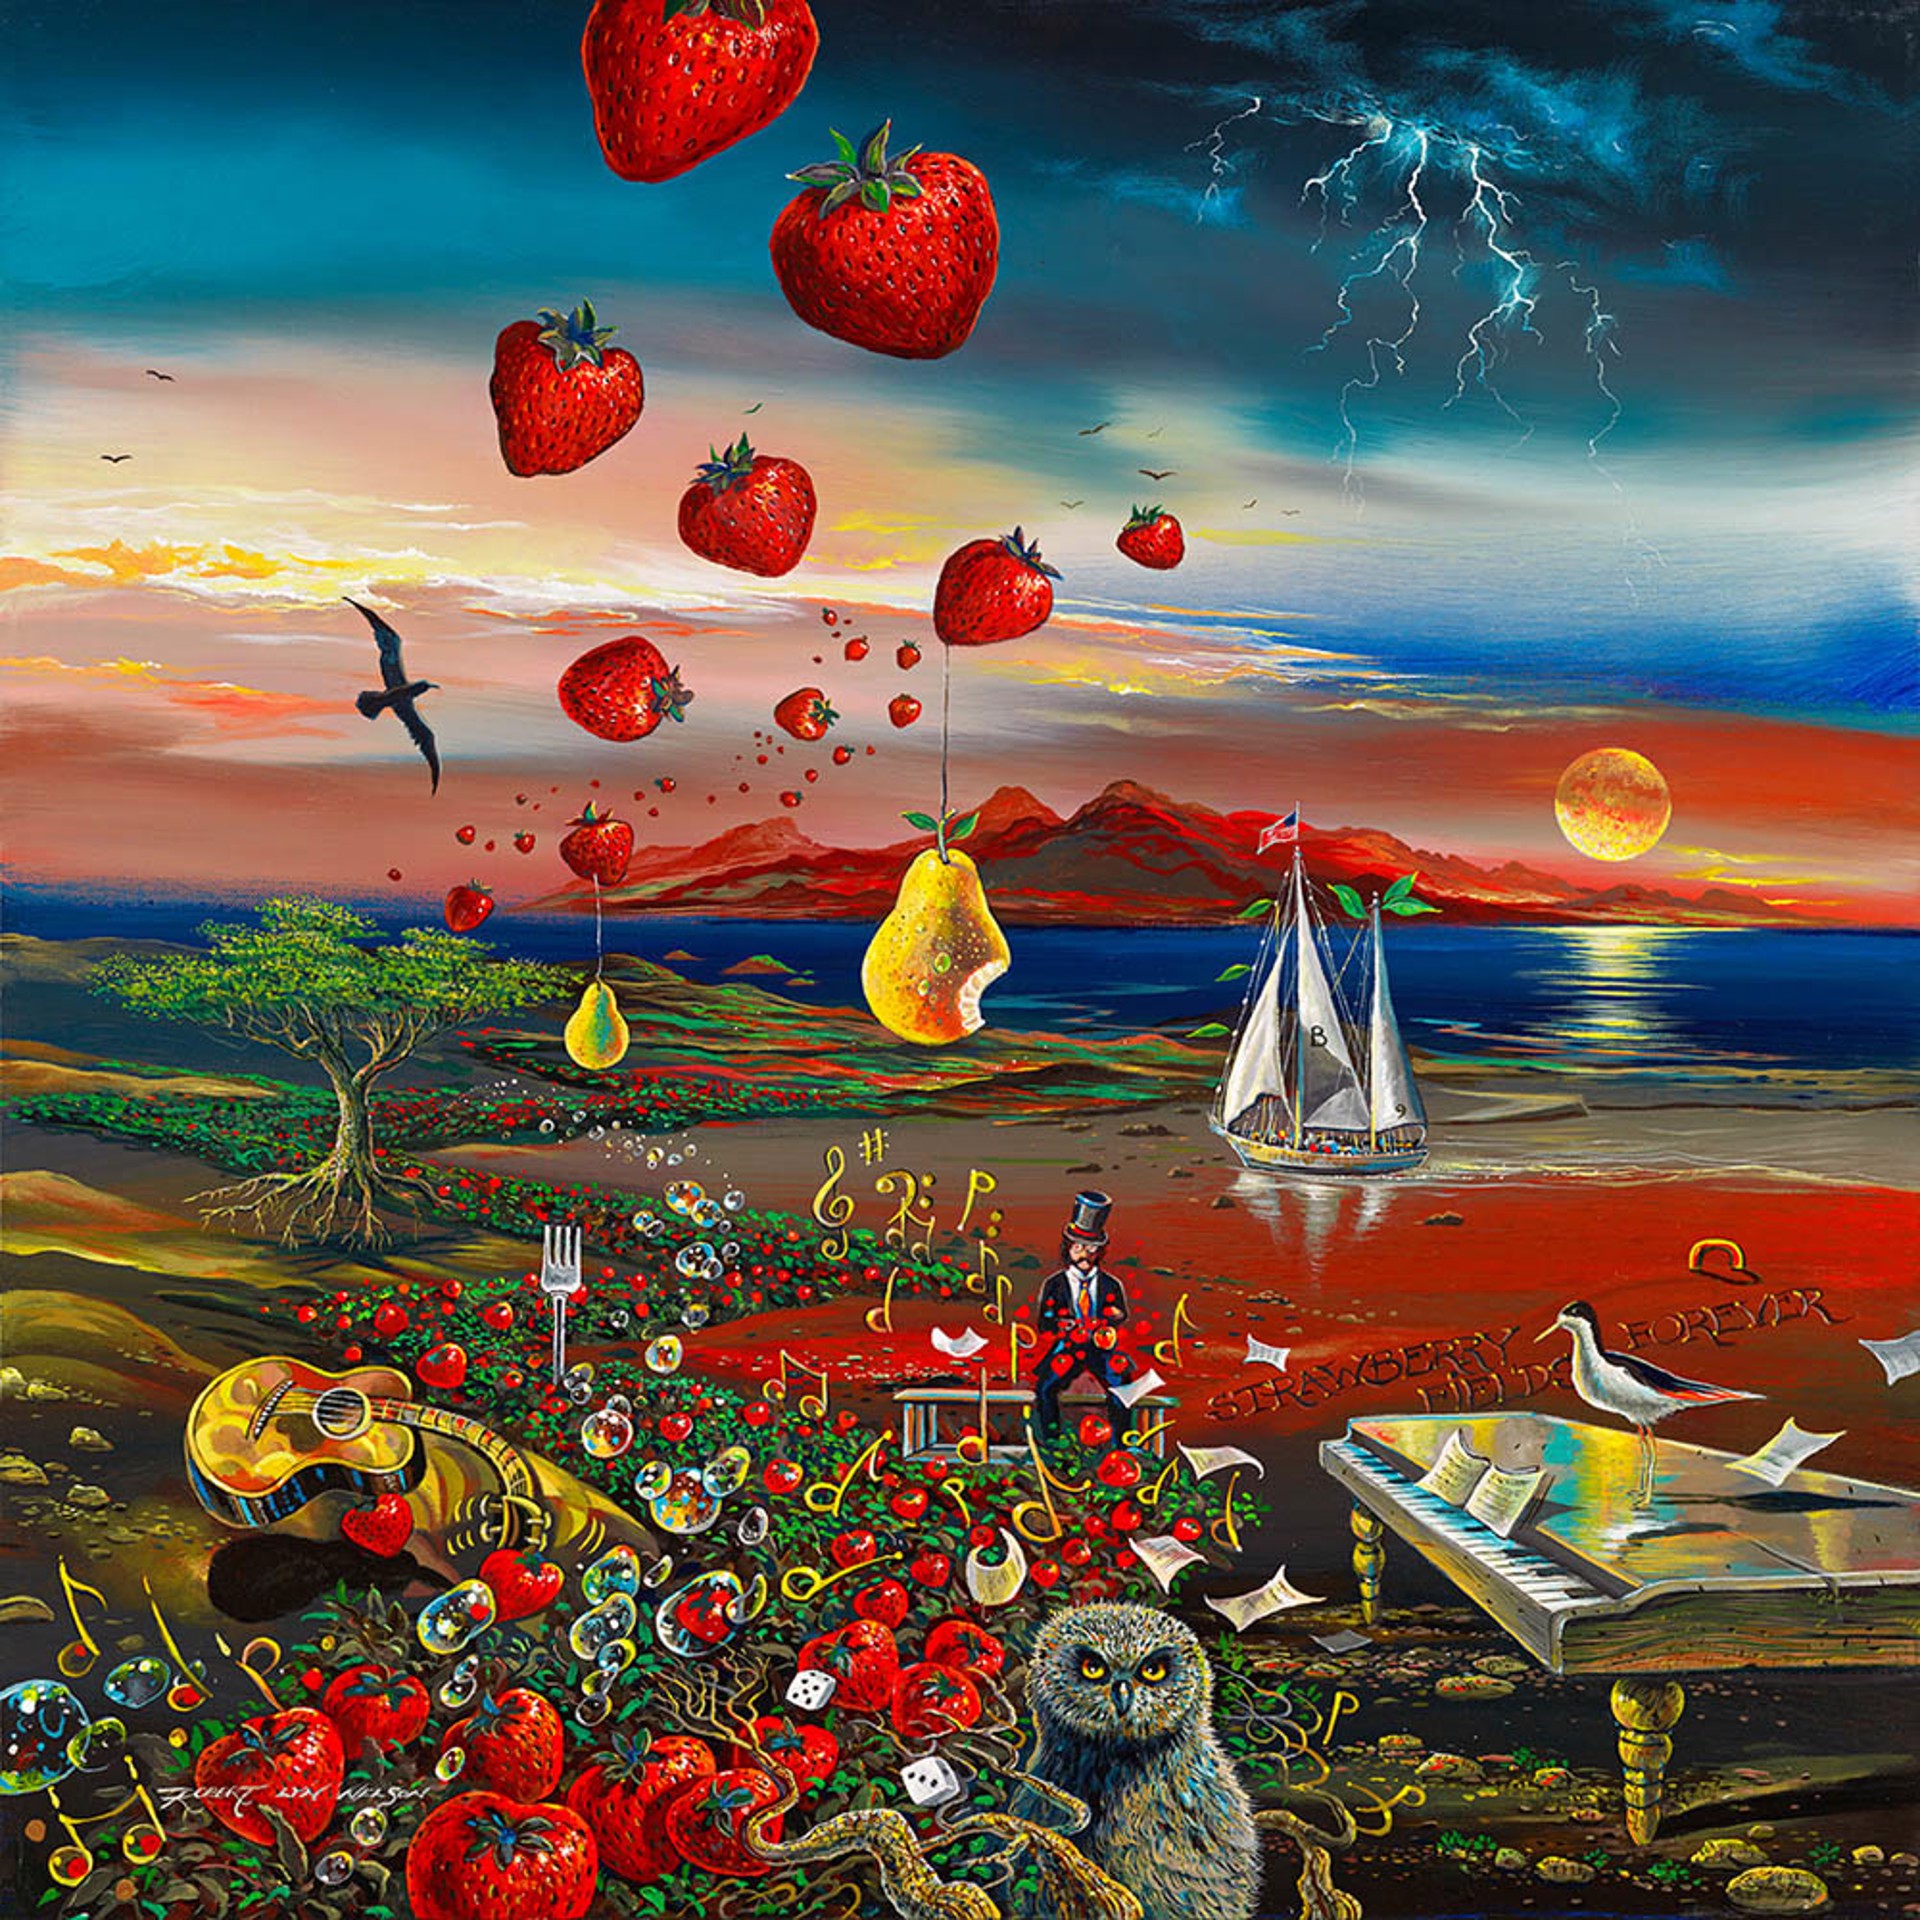 Strawberry Fields Forever - ORIGINAL by Robert Lyn Nelson